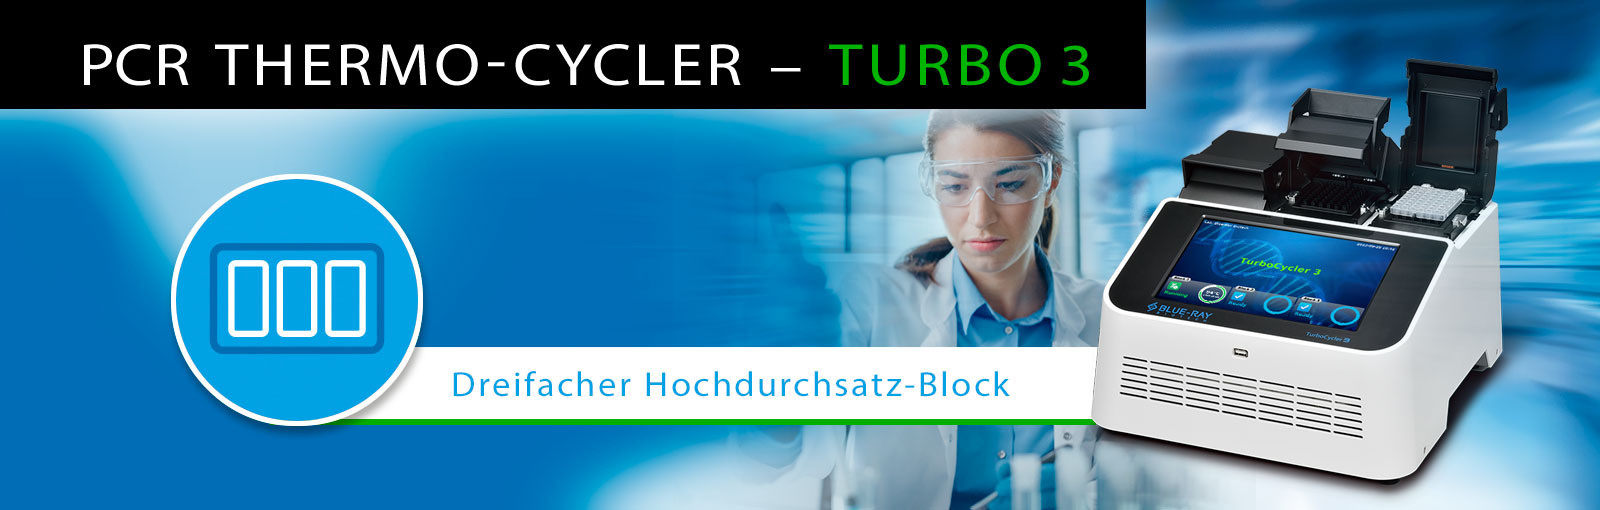 PCR Gradientcycler Turbo3